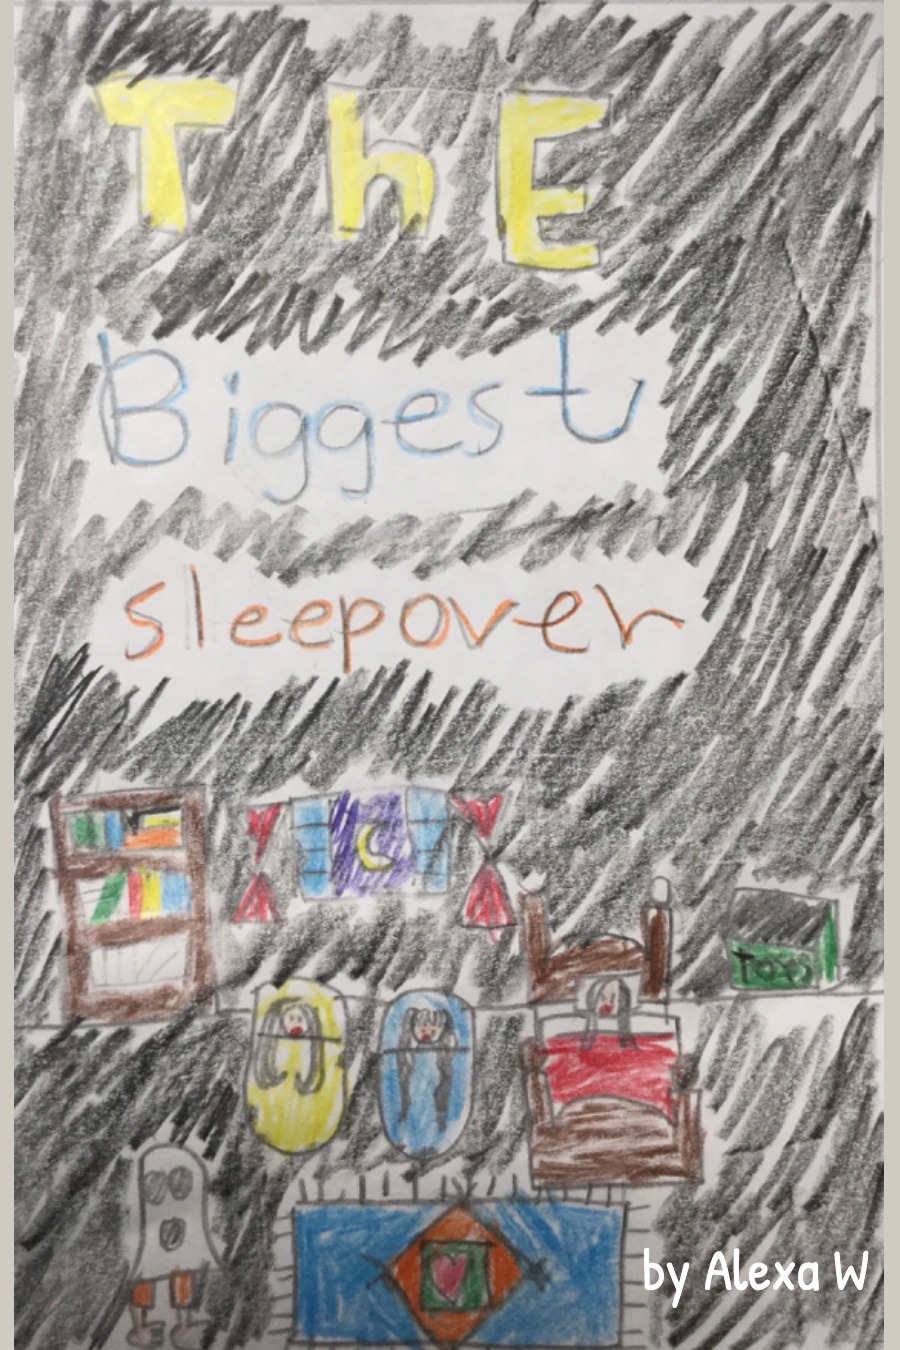 The Biggest Sleepover by Alexa W